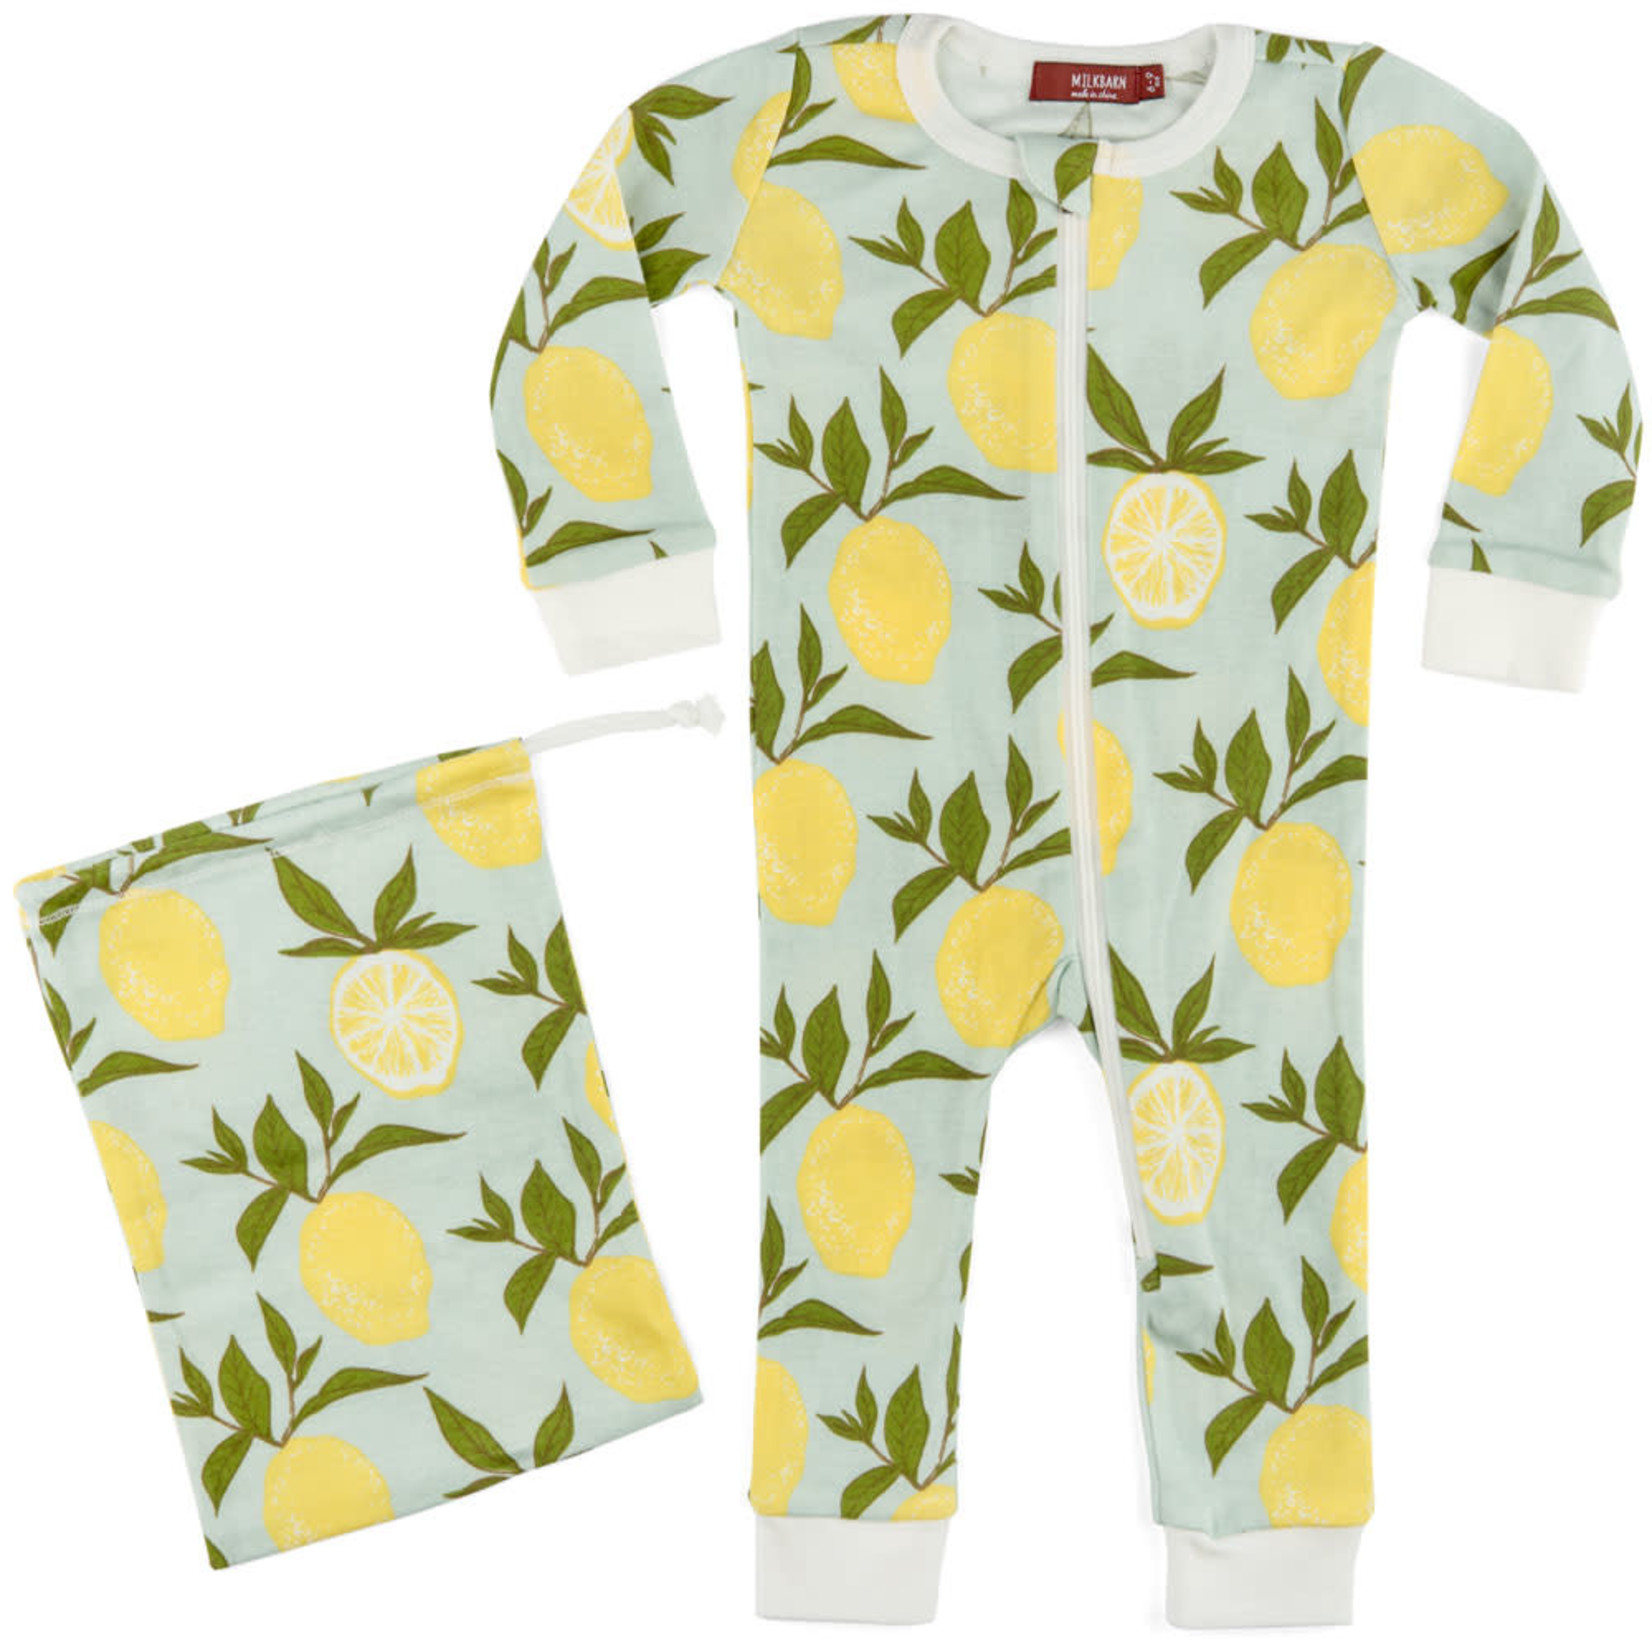 Milkbarn Milkbarn lemon pajamas 3-6